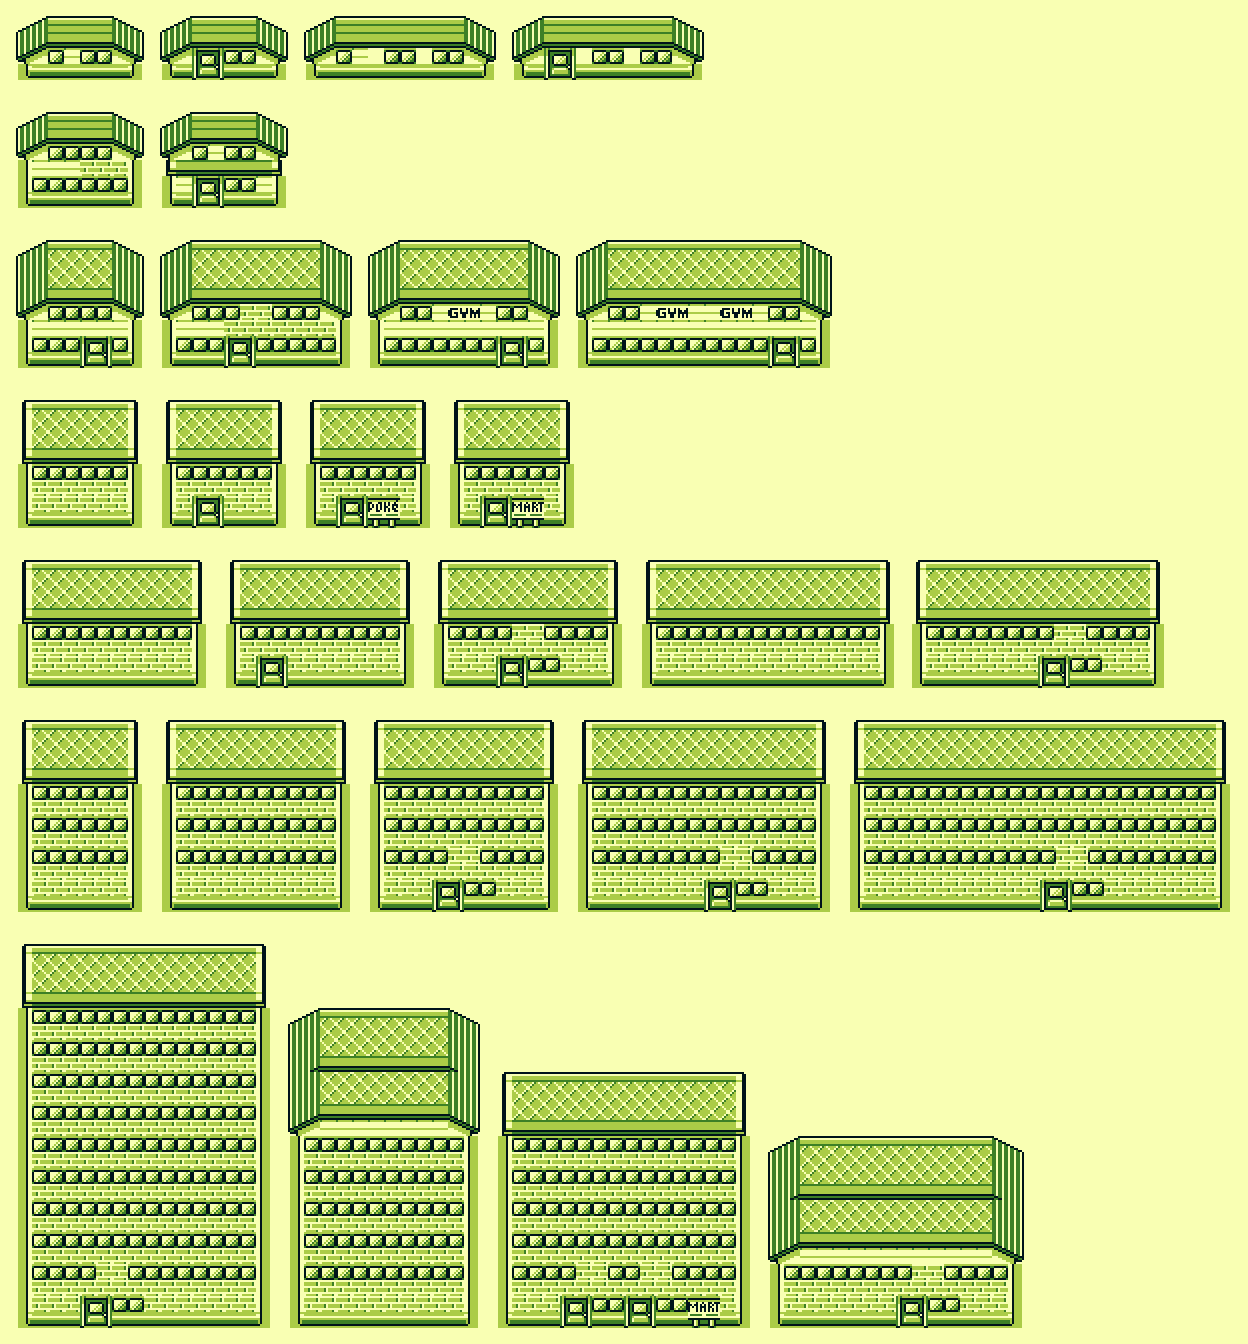 Looking At Pixels Part 3: Let's Look at Each Building Type in Gen 1 Pokémon